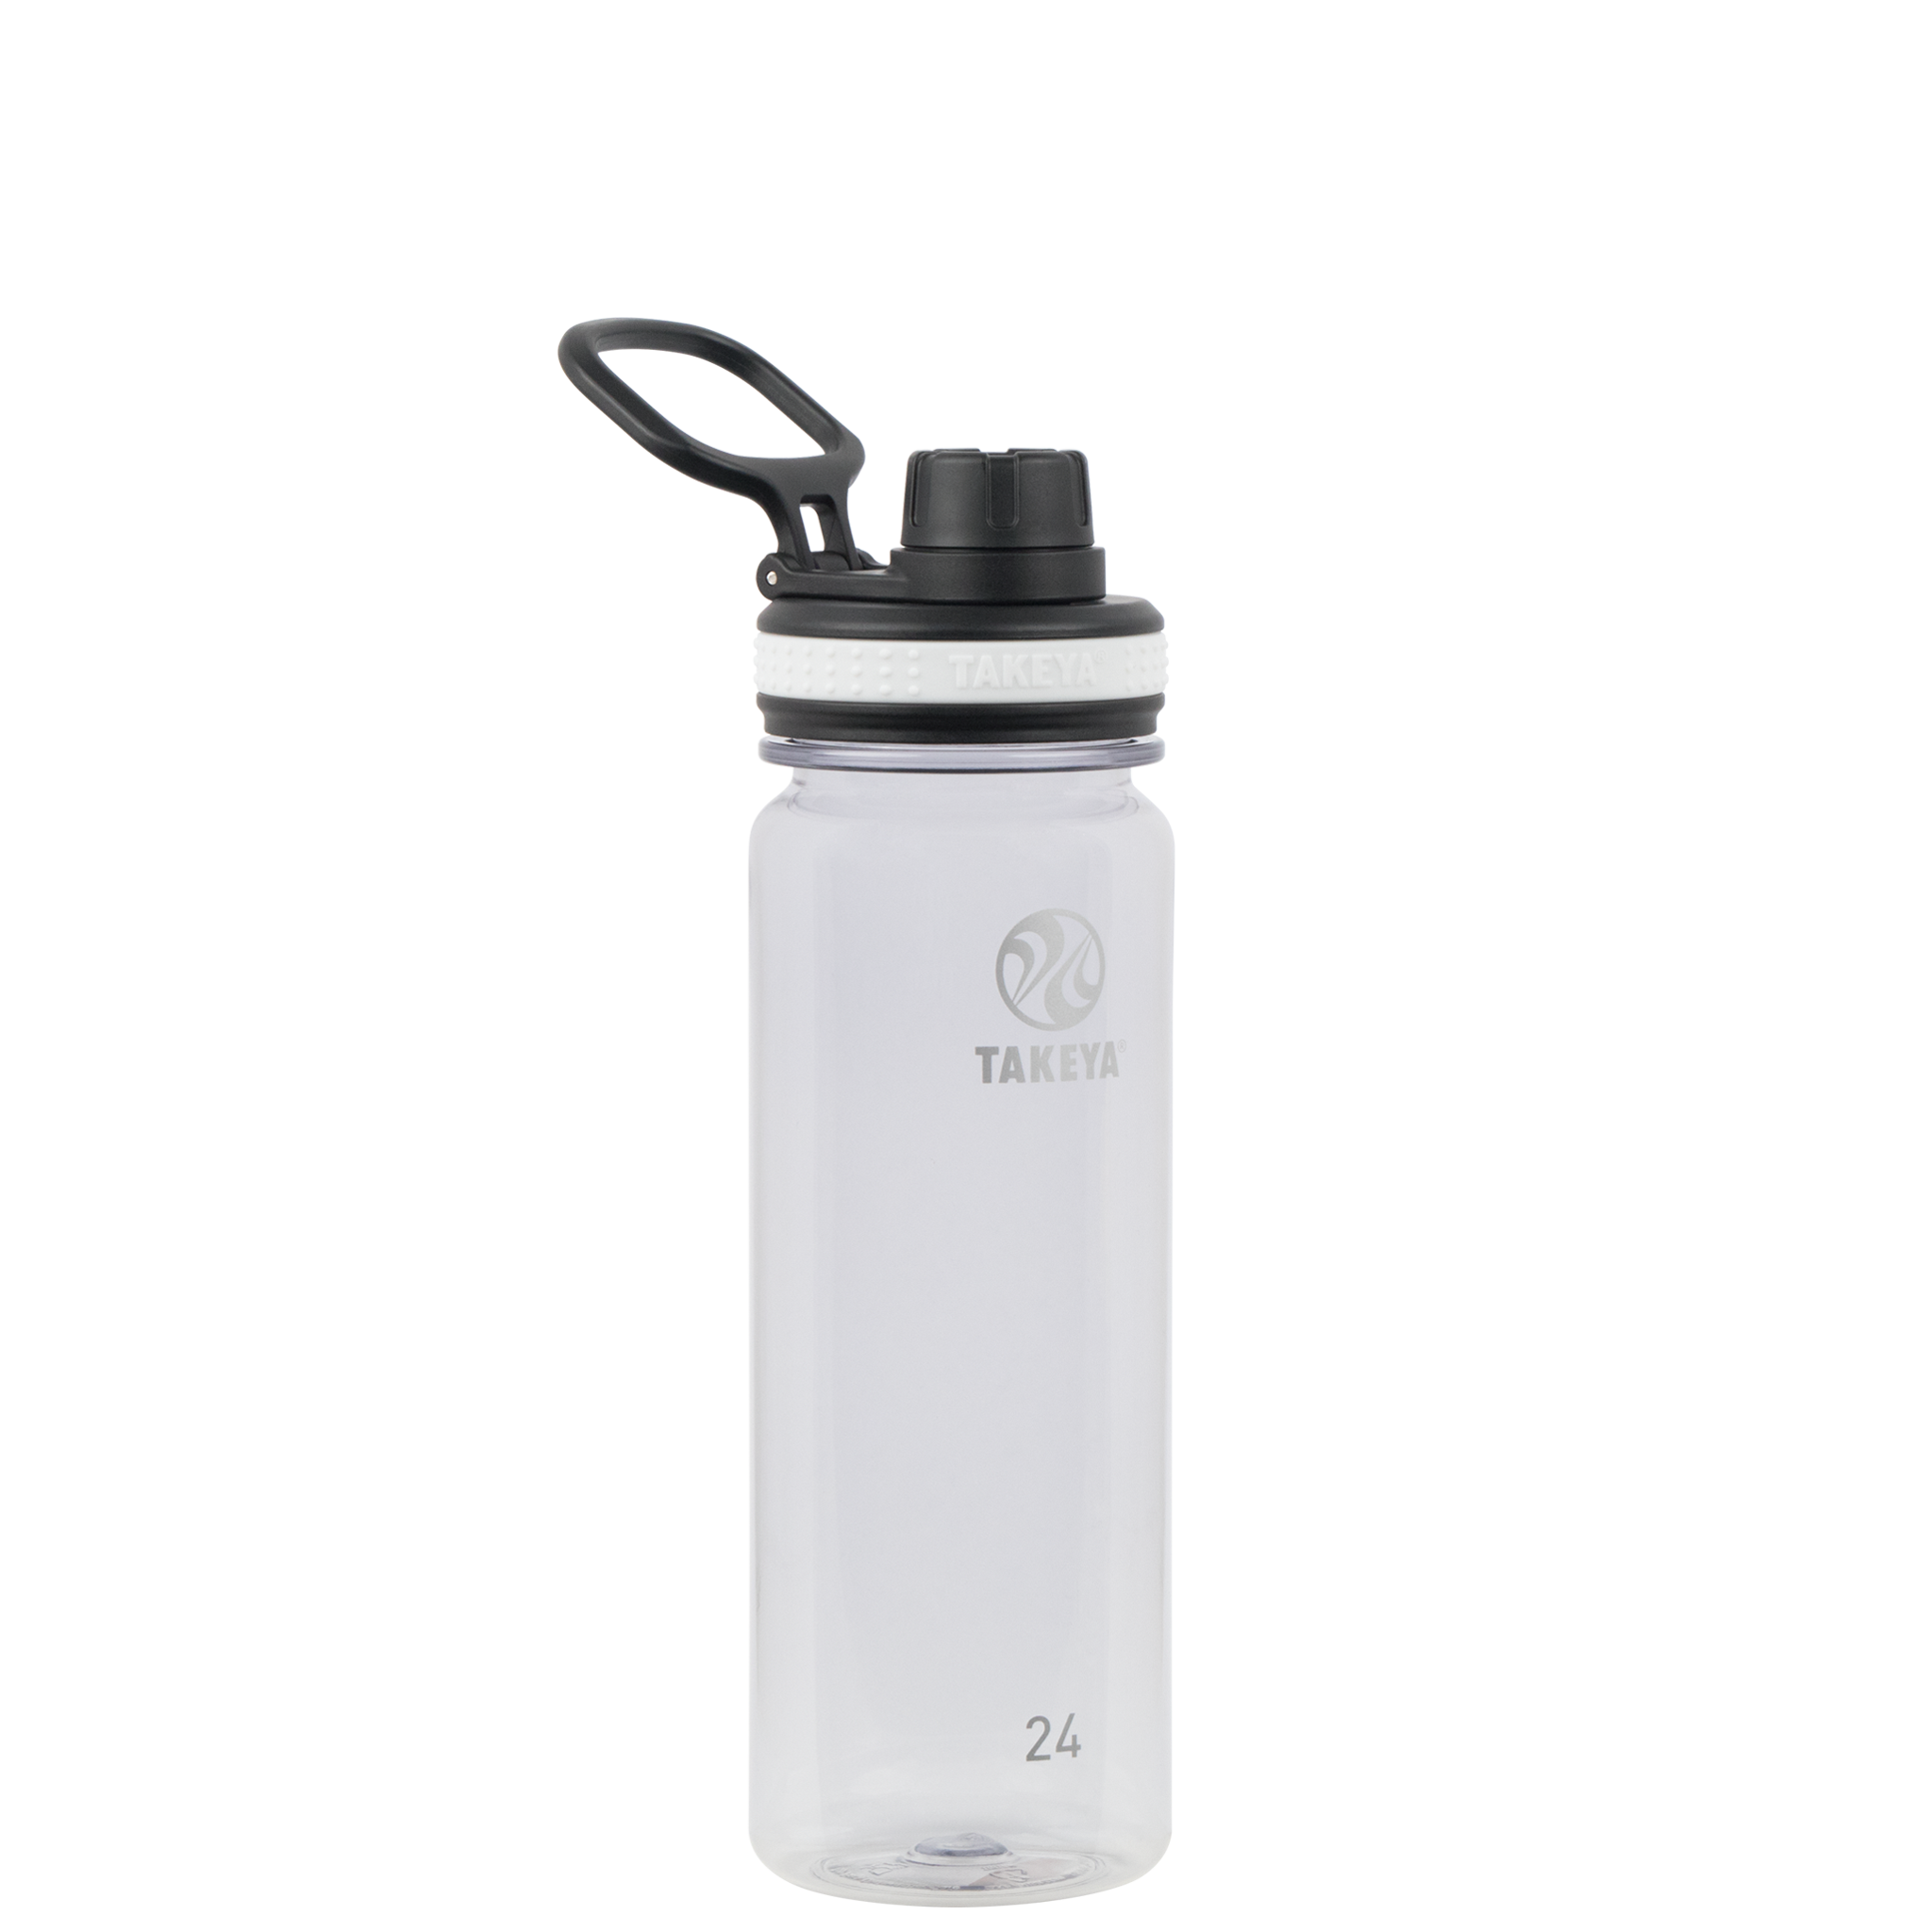 Takeya Actives Spout Reusable Water Bottle, 32 oz, Cobalt